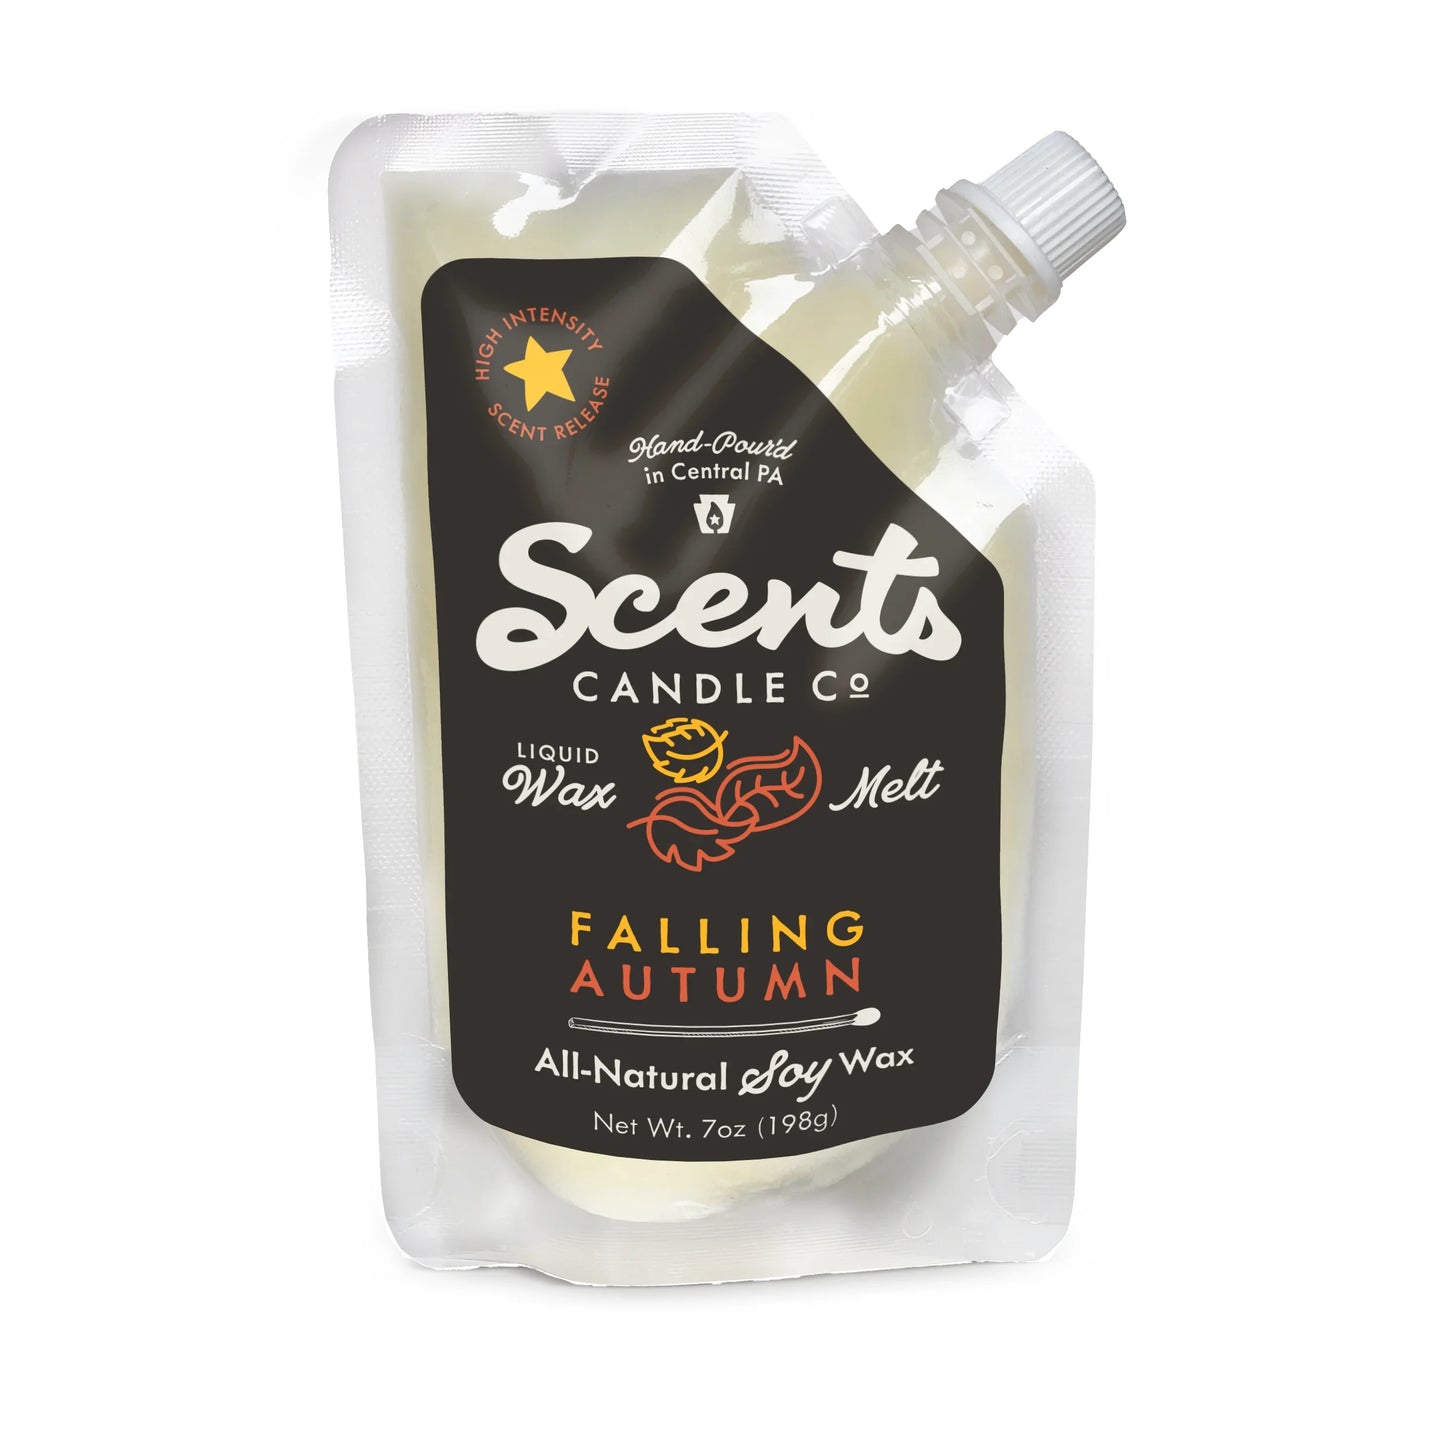 Scents Candle Co. Falling Autumn Liquid Wax Melt